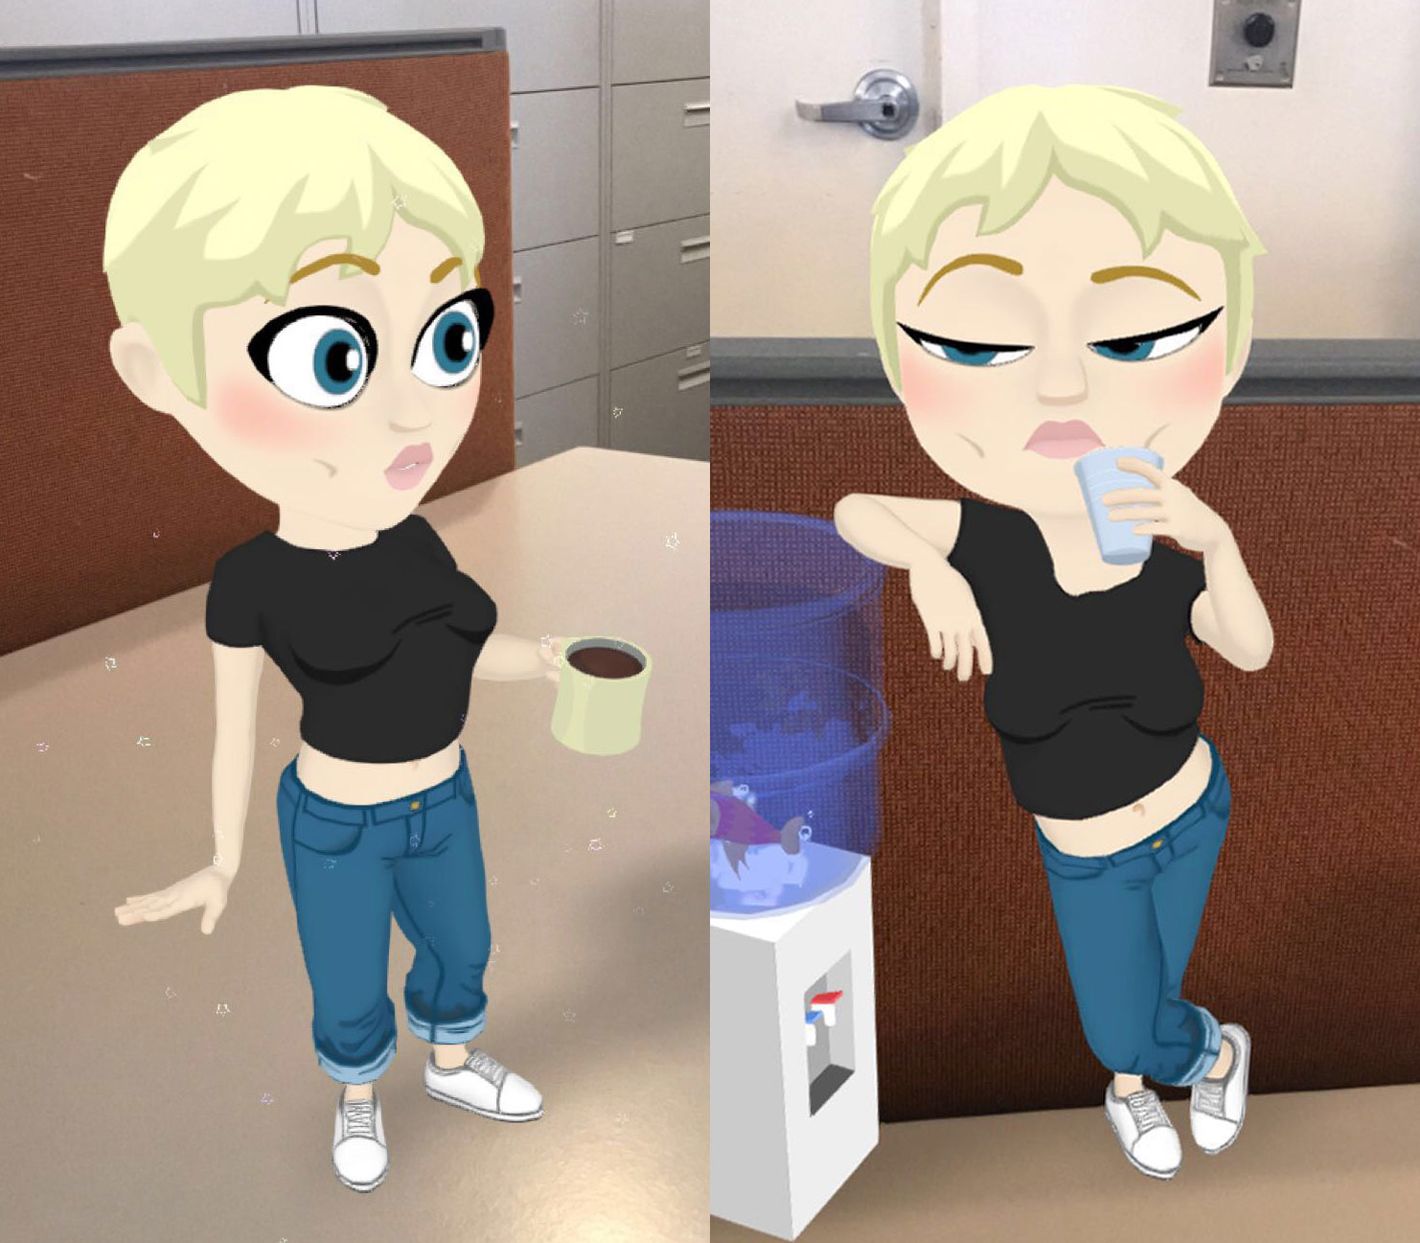 What's Up With Snapchat Bitmoji Boob Animation?